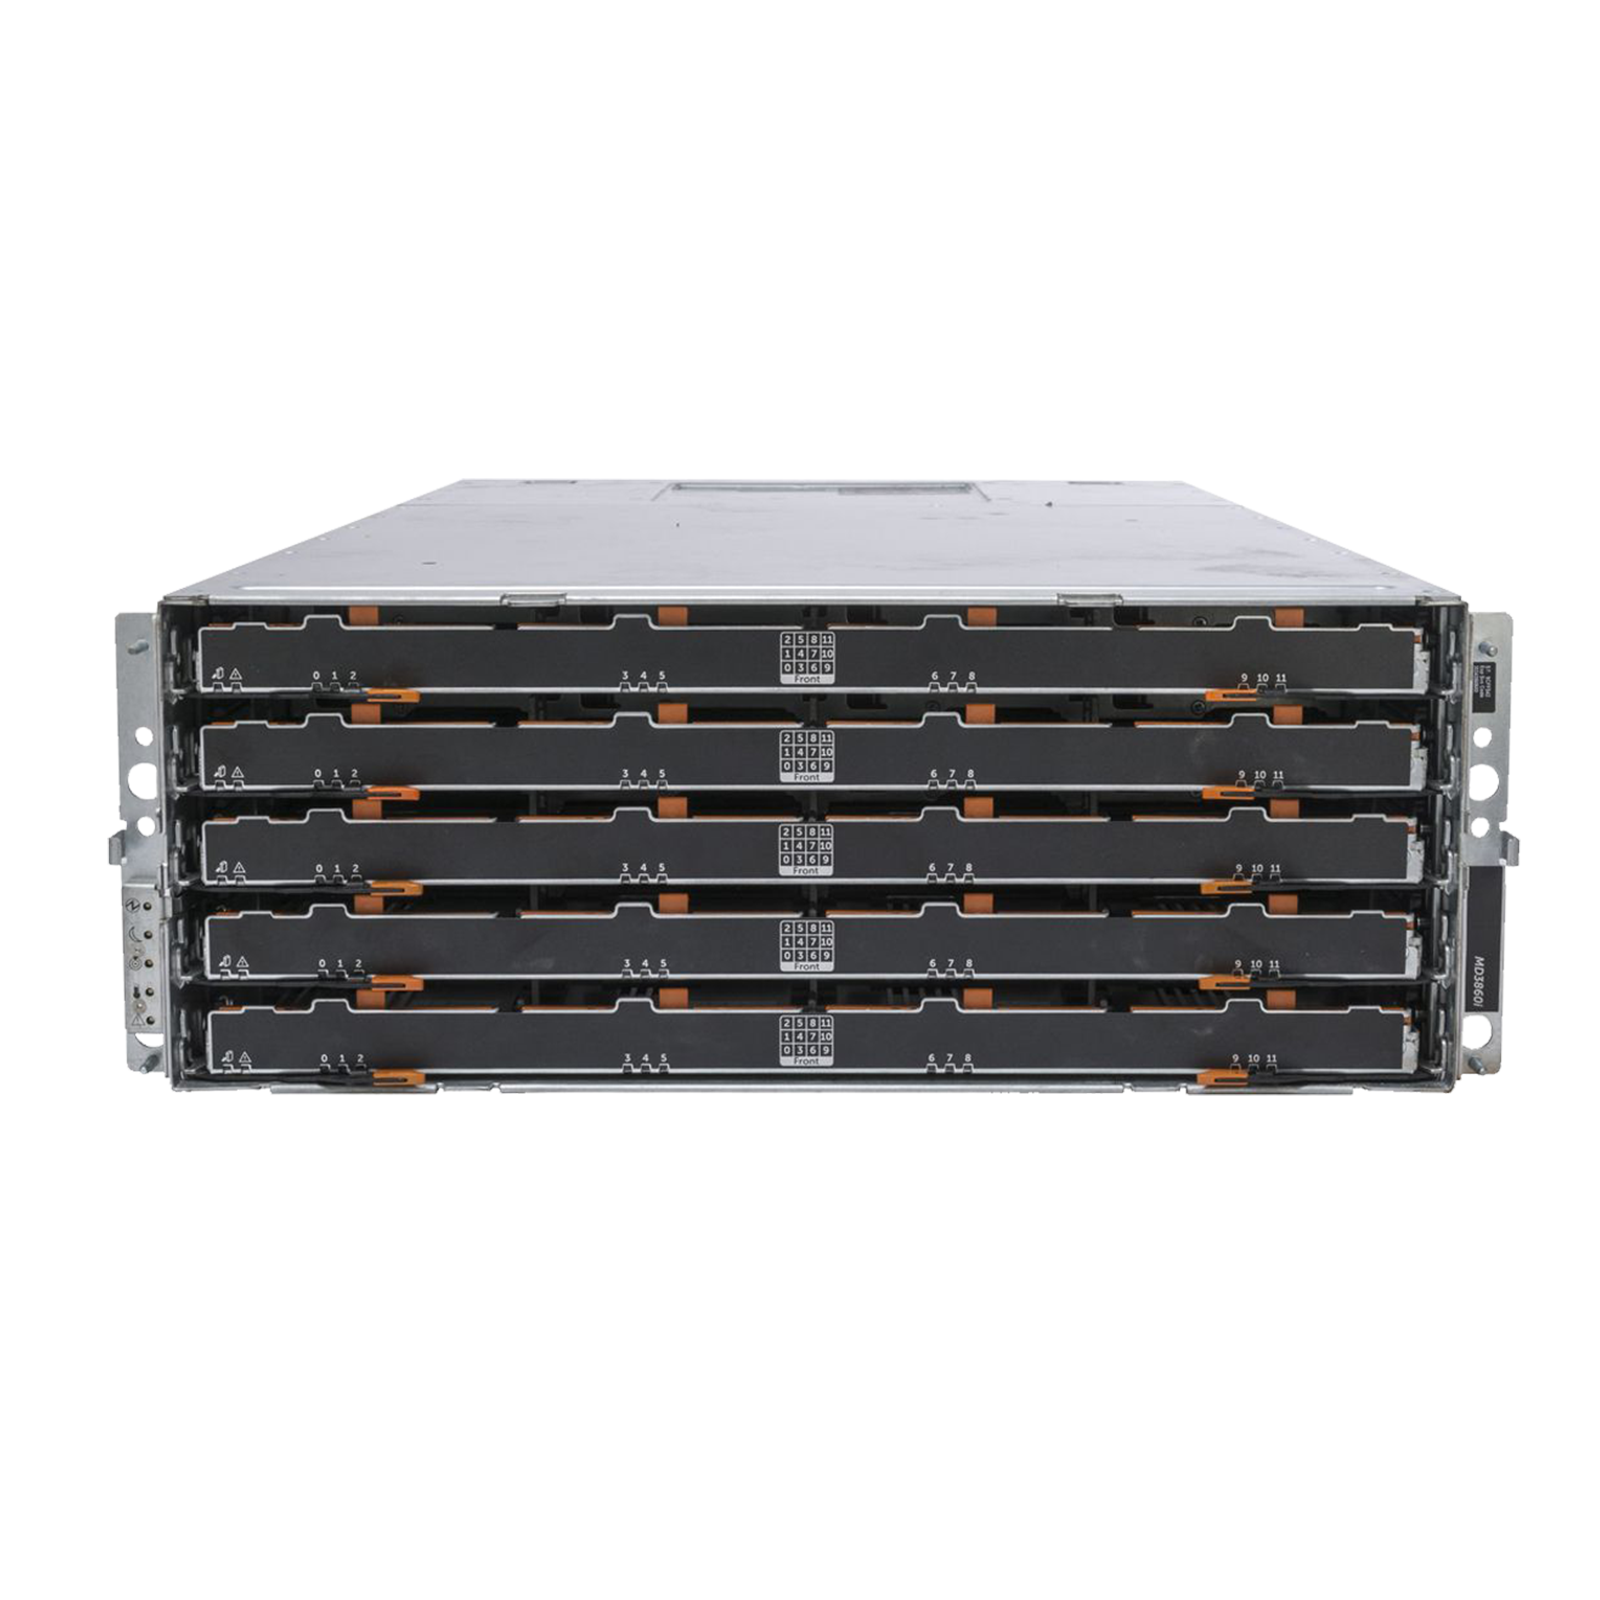 Dell PowerVault MD3460 Storage Array (60x 3.5" 12G SAS Bays, 2x 12G SAS Controllers)